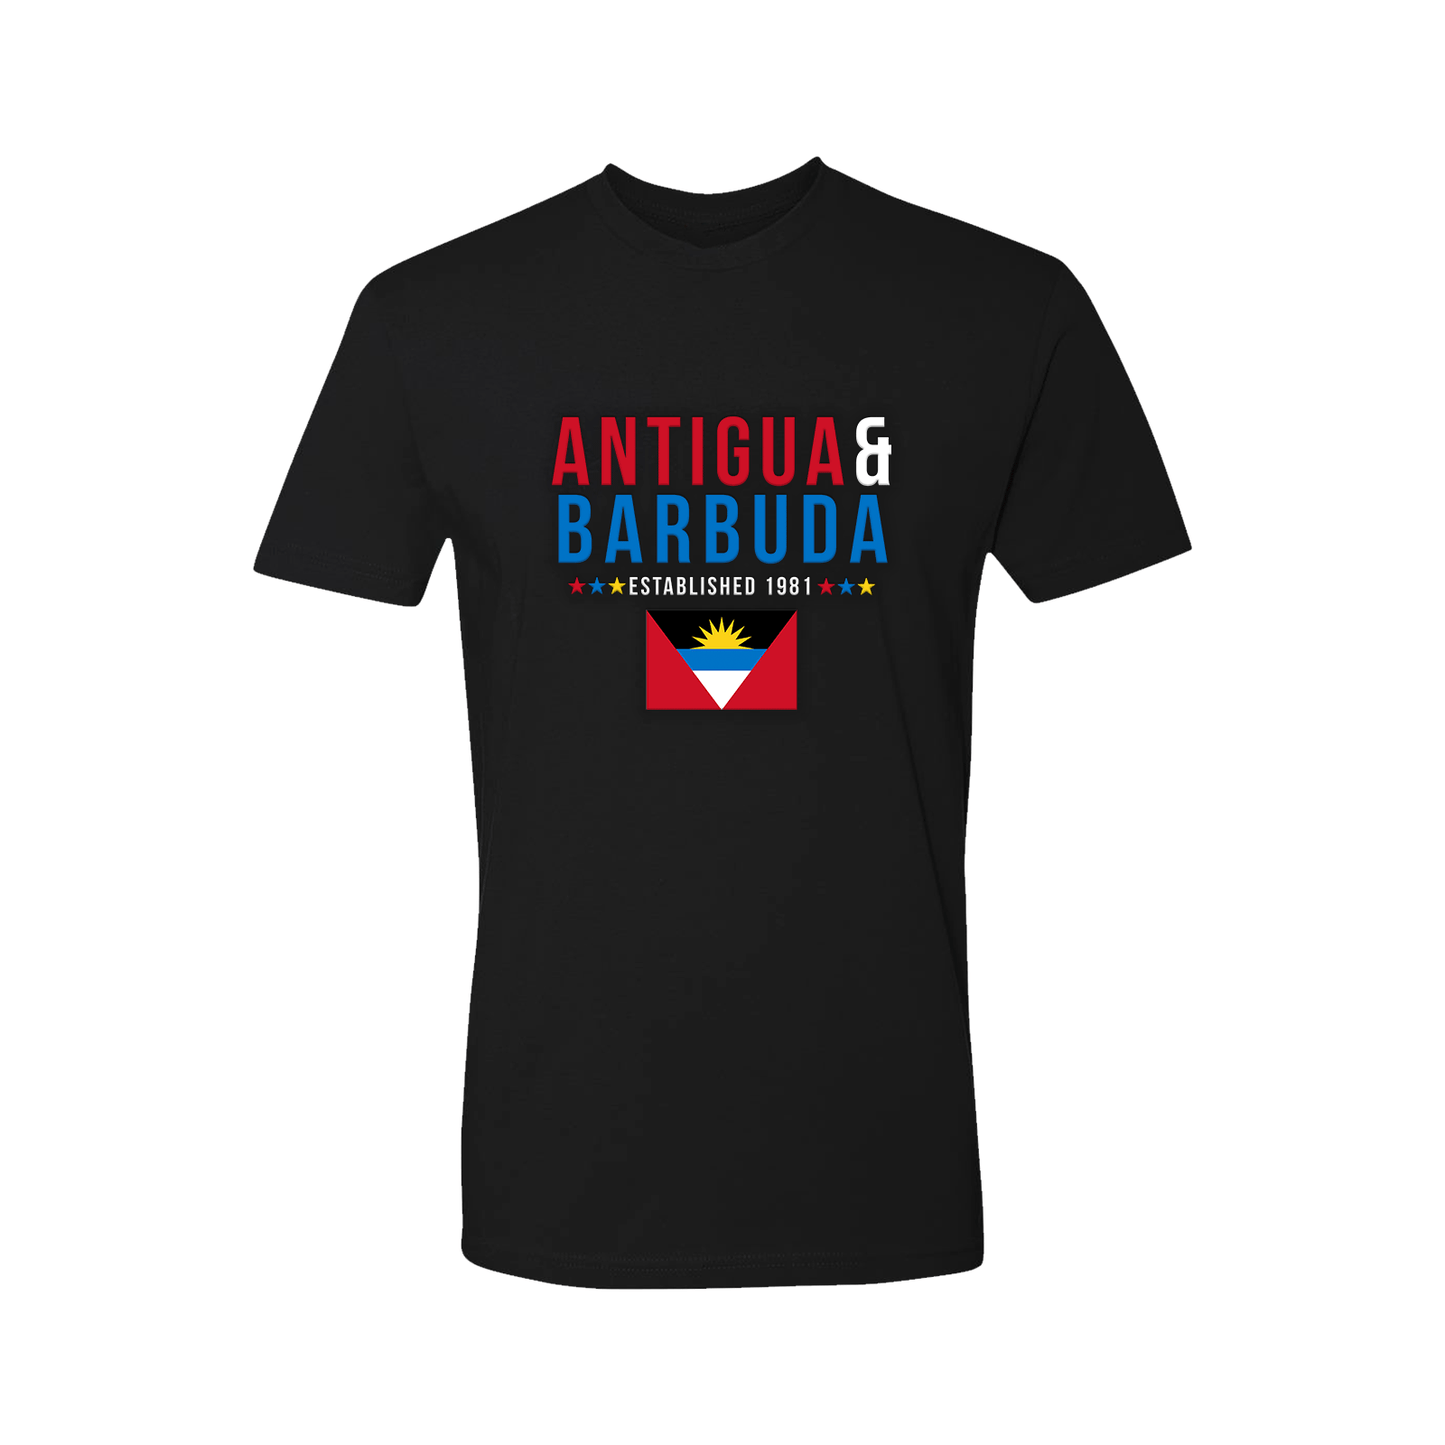 Antigua & Barbuda Short Sleeve Shirt - Adult